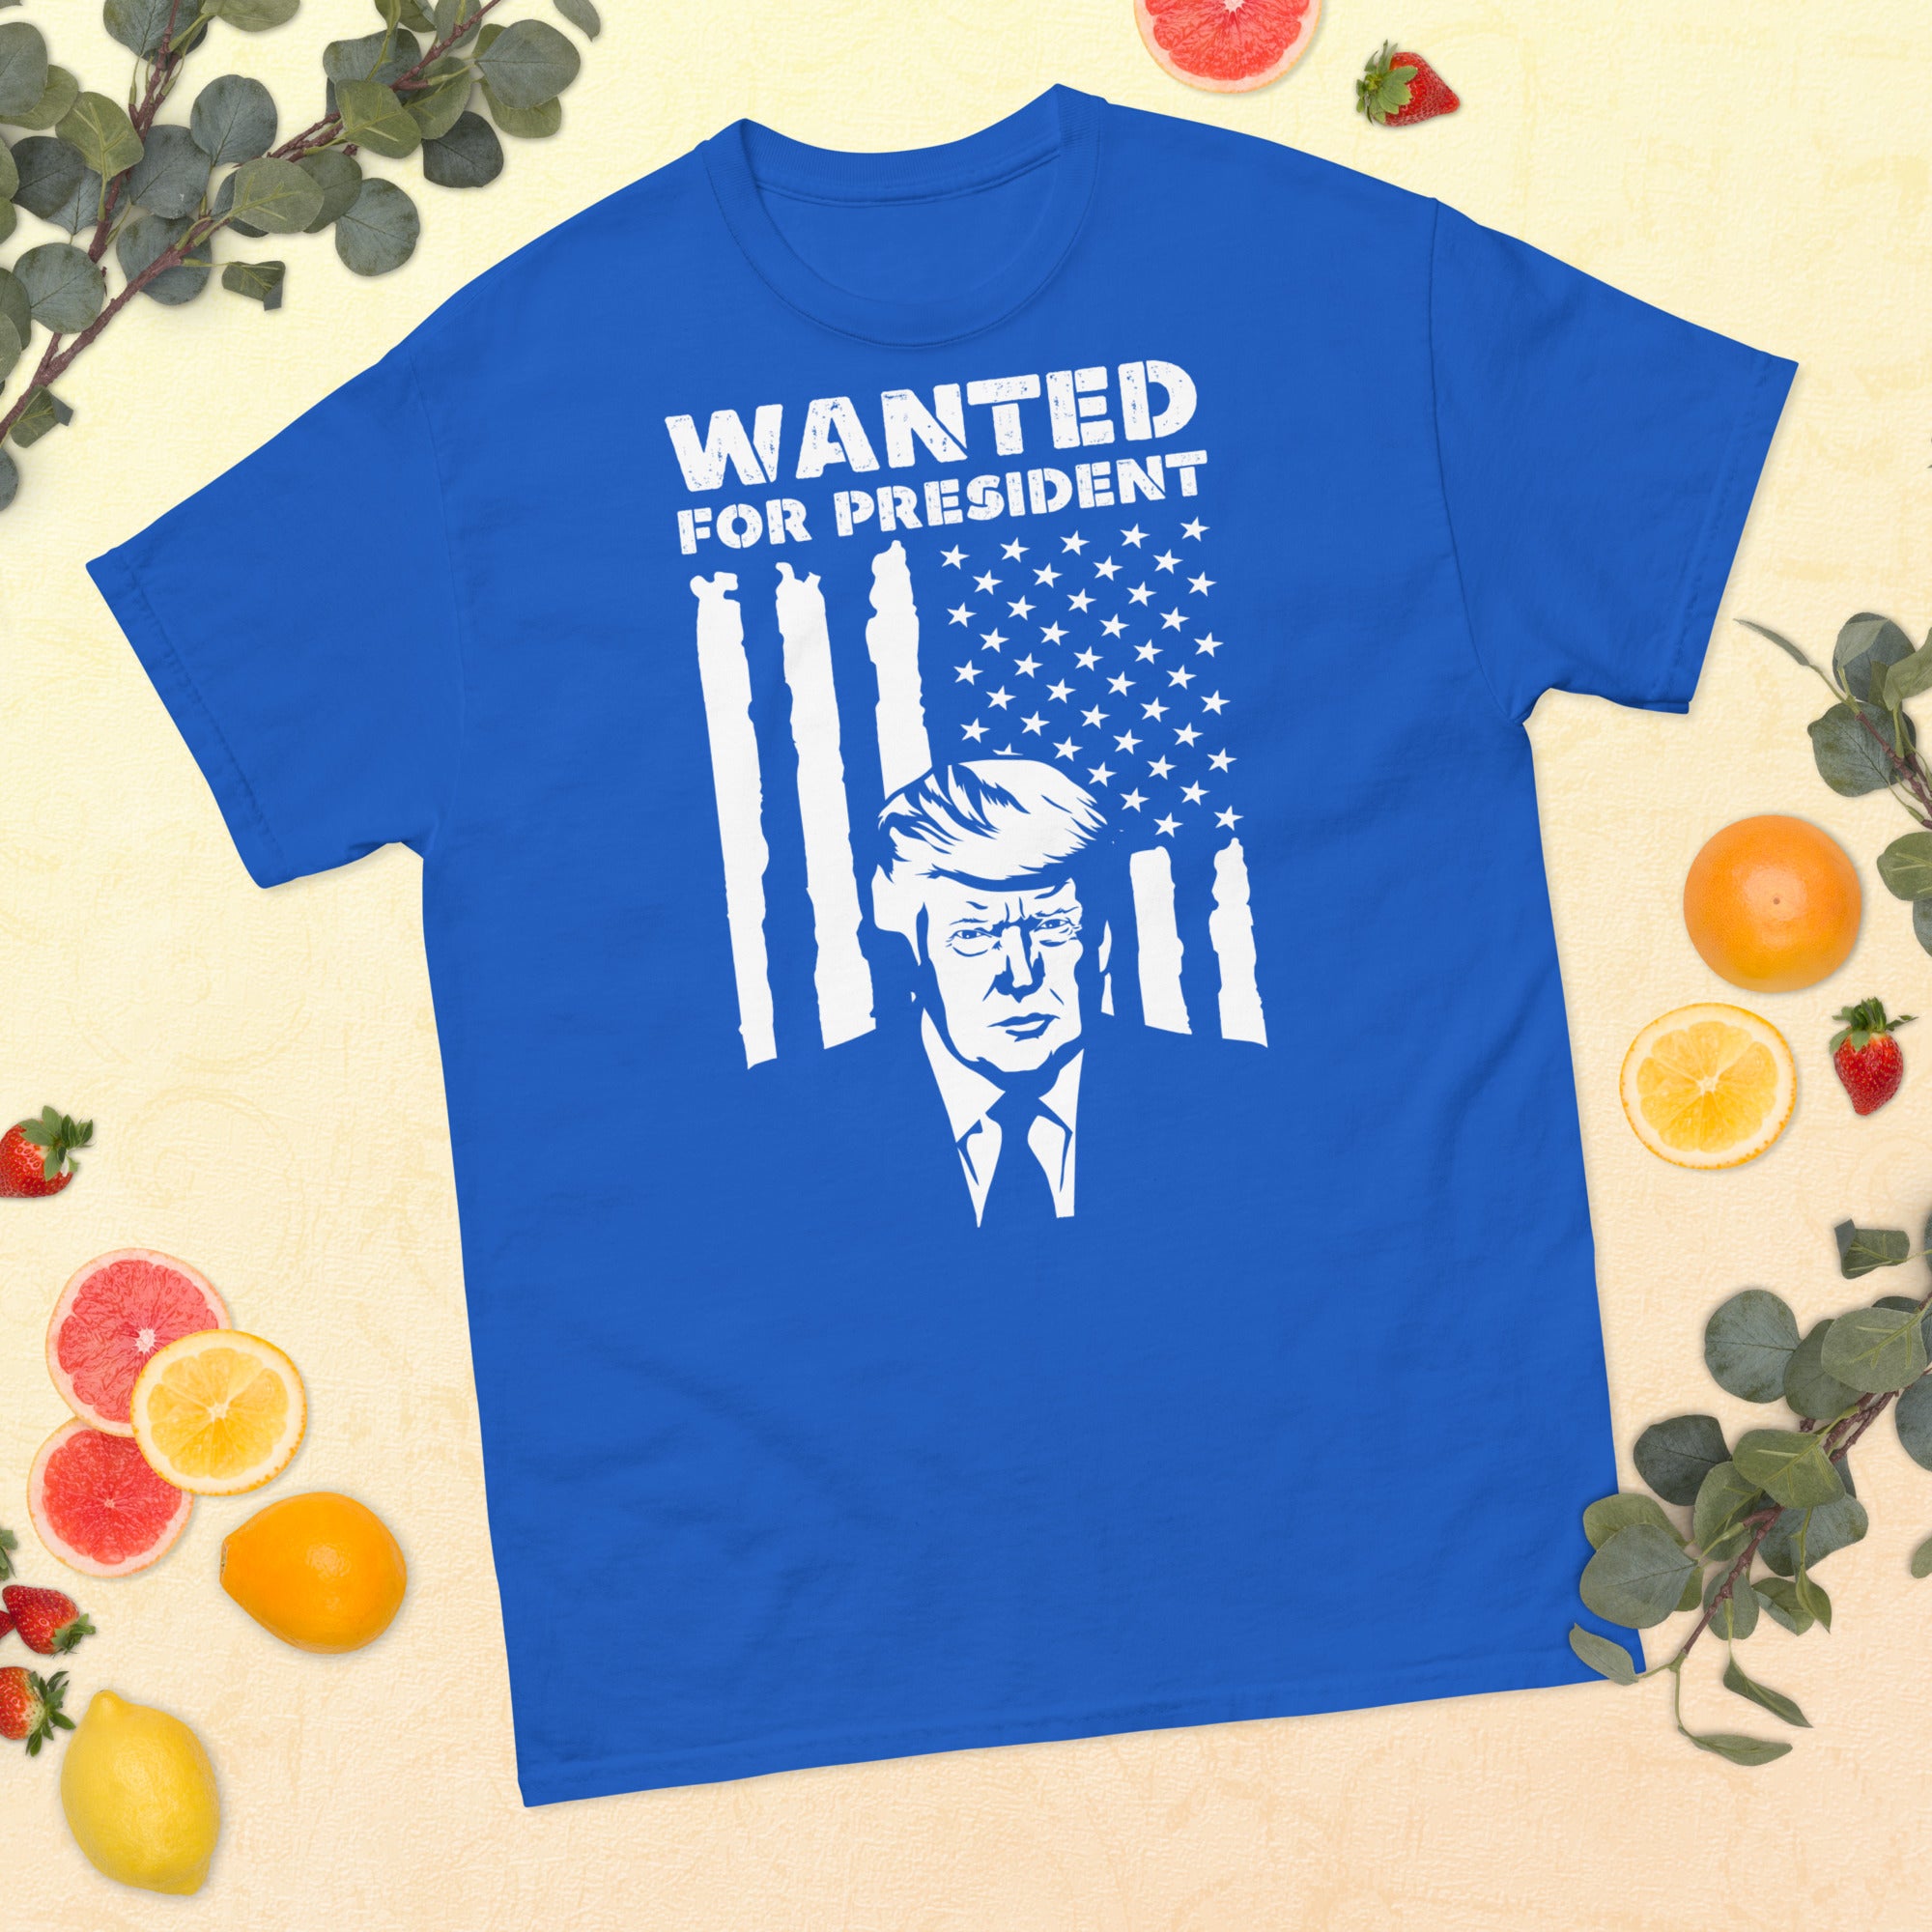 Wanted For President Trump 2024 Shirt, Republican Gift, Funny Trump Tee, White House Trump 2024 Shirt, Political TShirt, Election Shirts